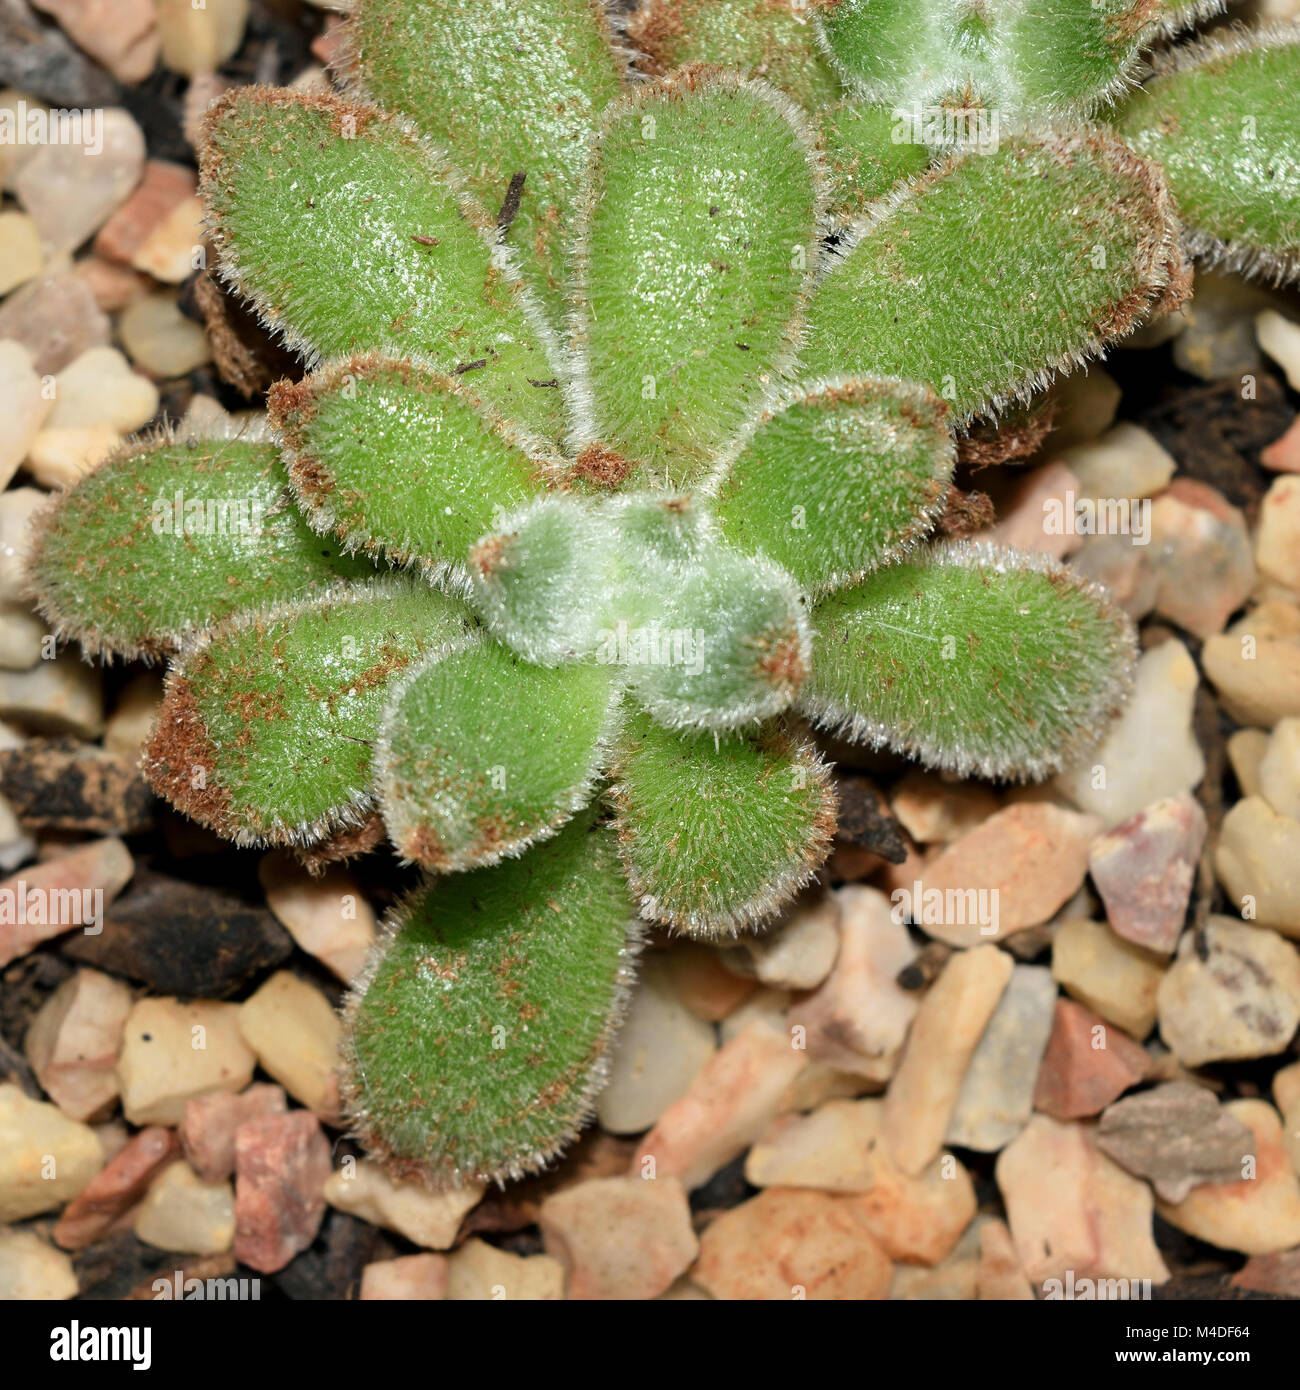 Small plant of Echeveria setosa on potting soil with pebbles. Stock Photo